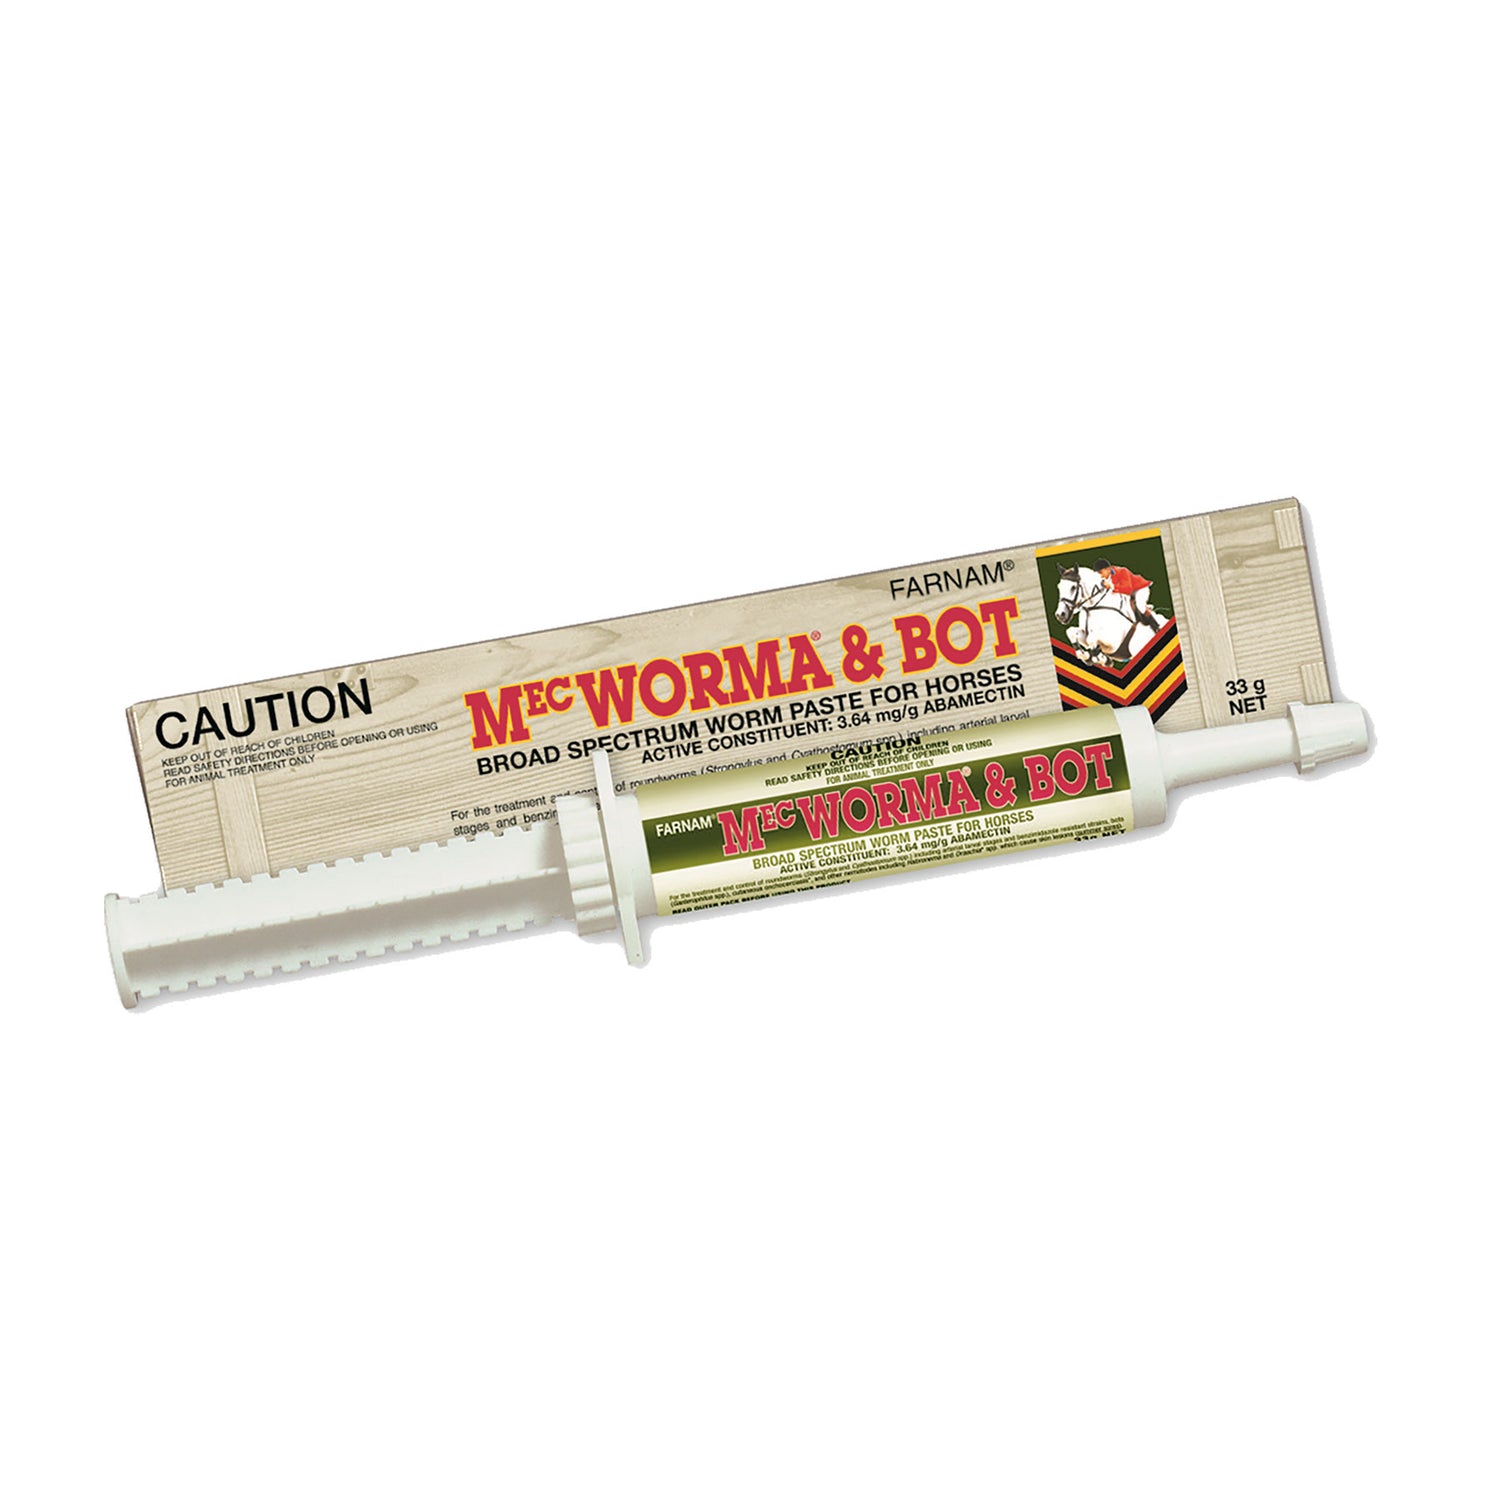 Mecworma Paste & Bot 33g (I.A.H.)